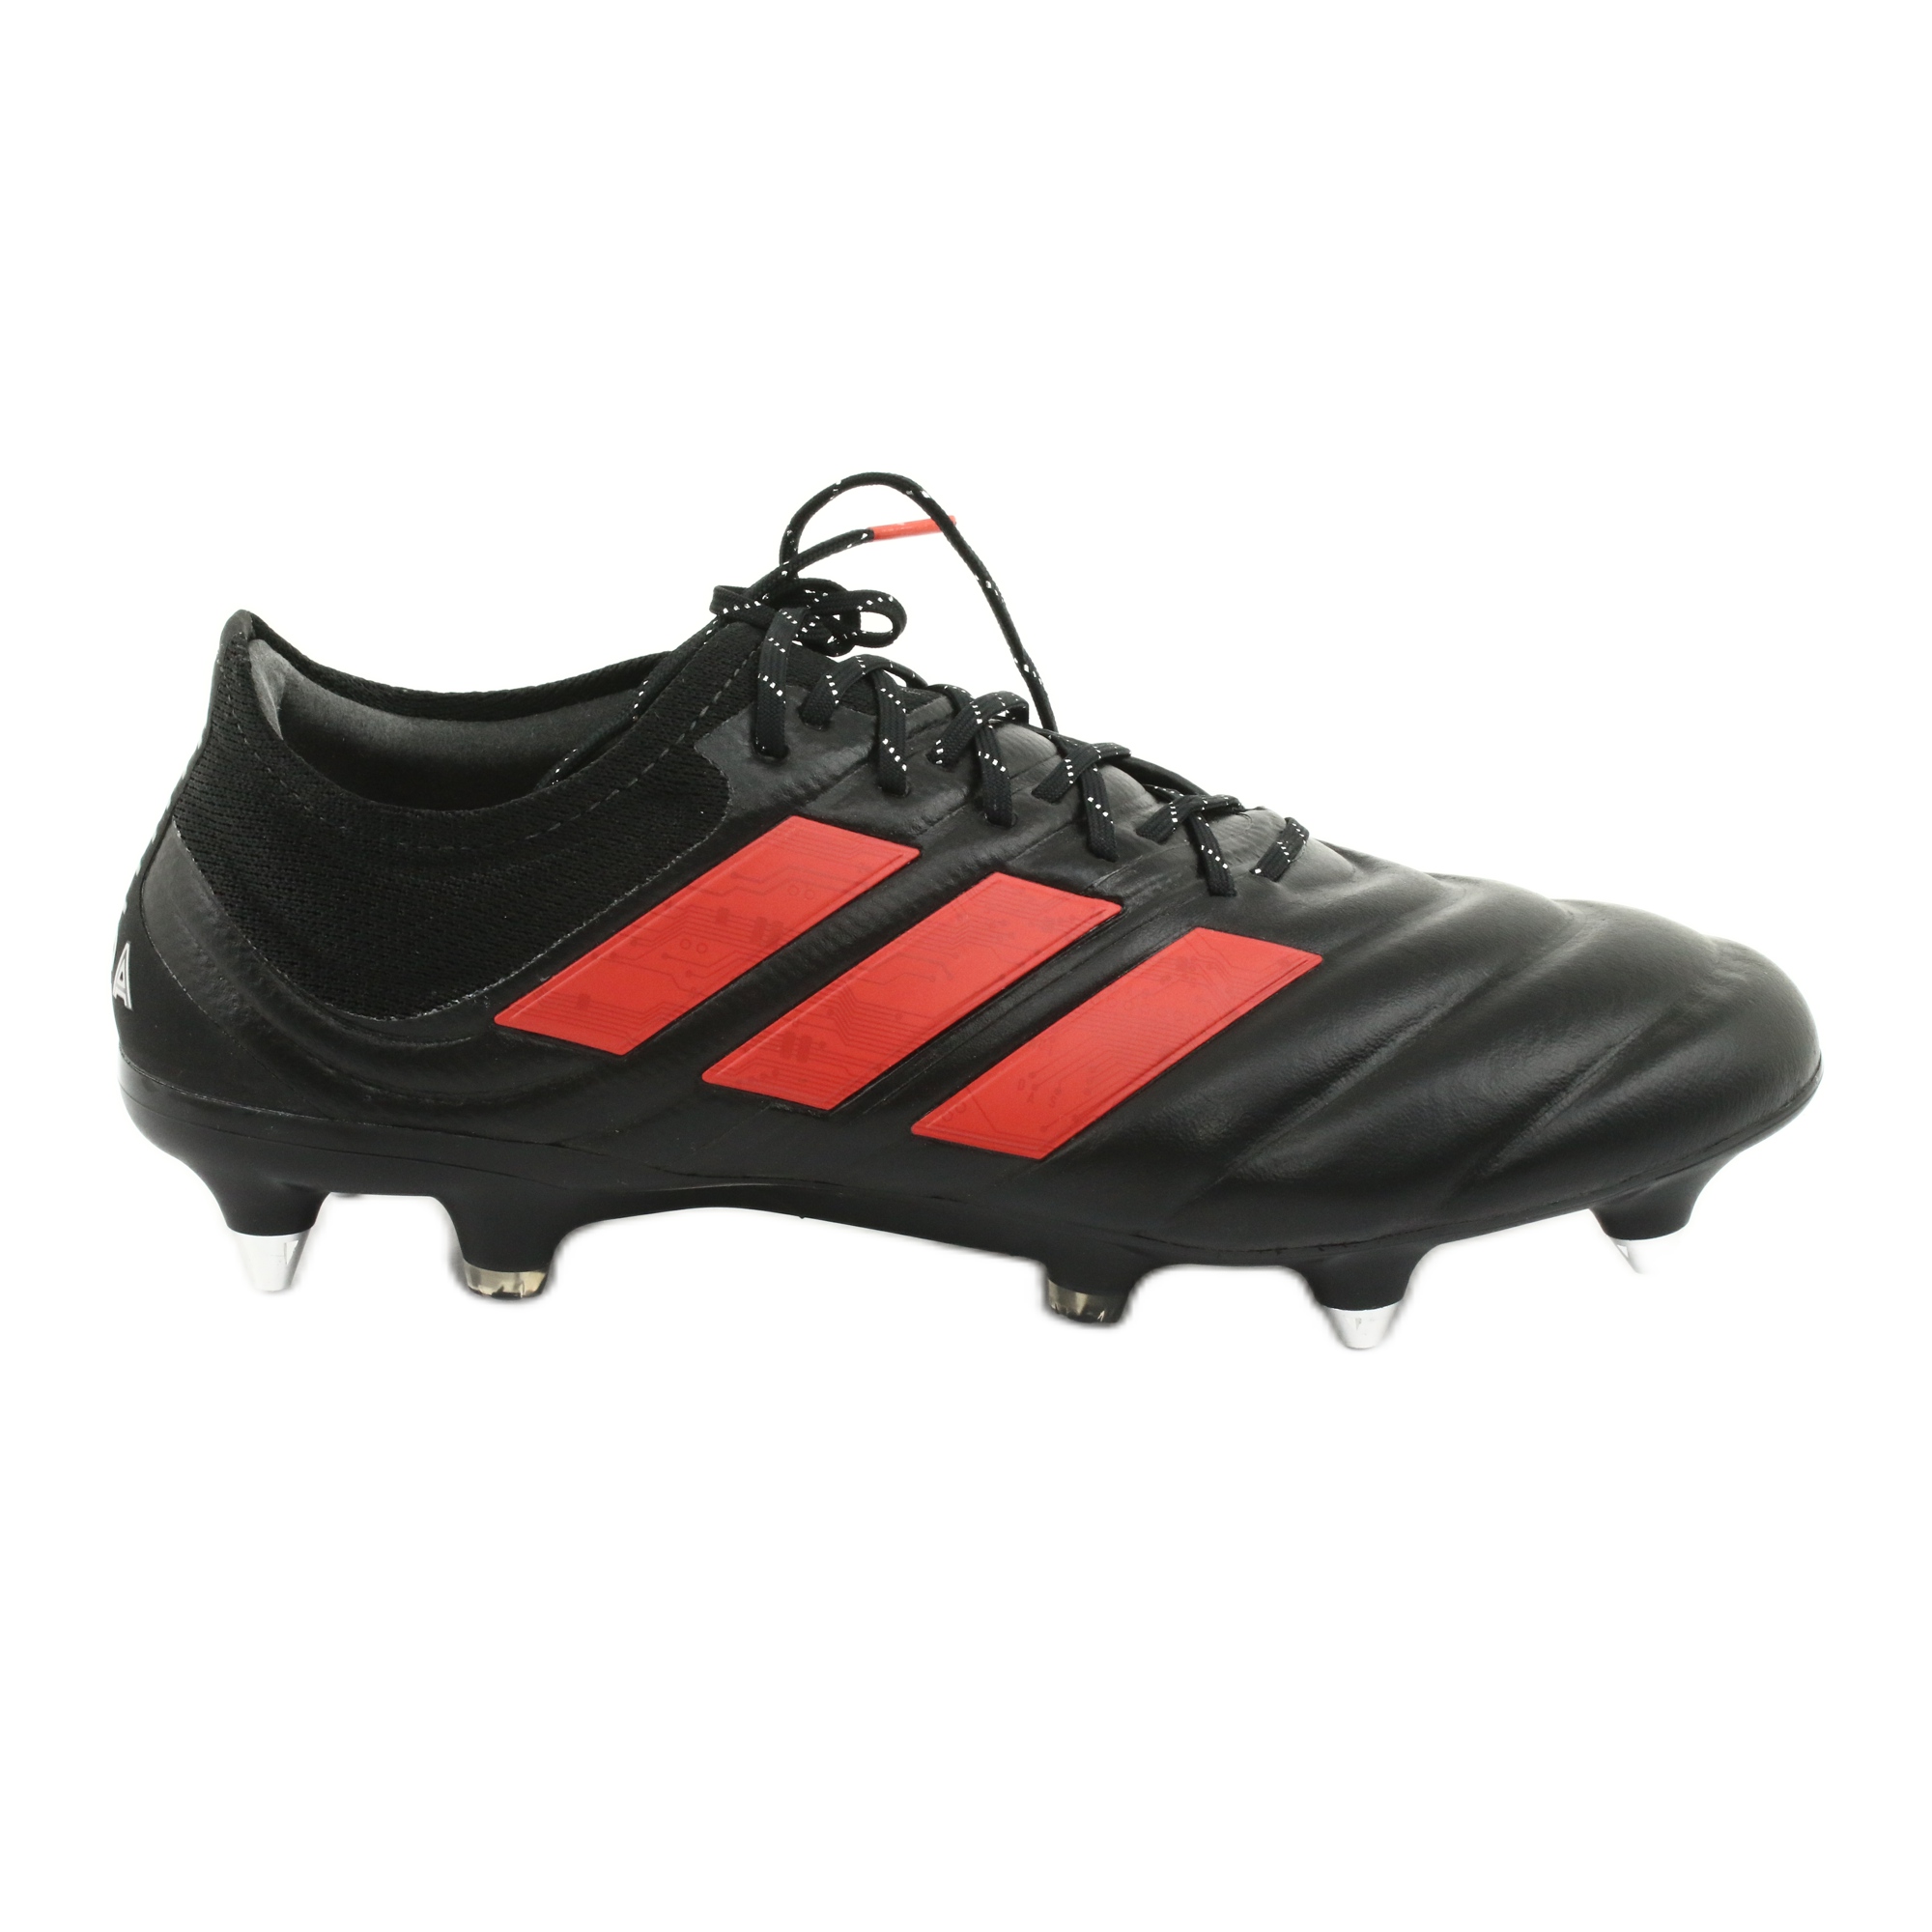 Parcial índice bar Adidas Copa 19.1 Sg M G26642 football boots black - KeeShoes